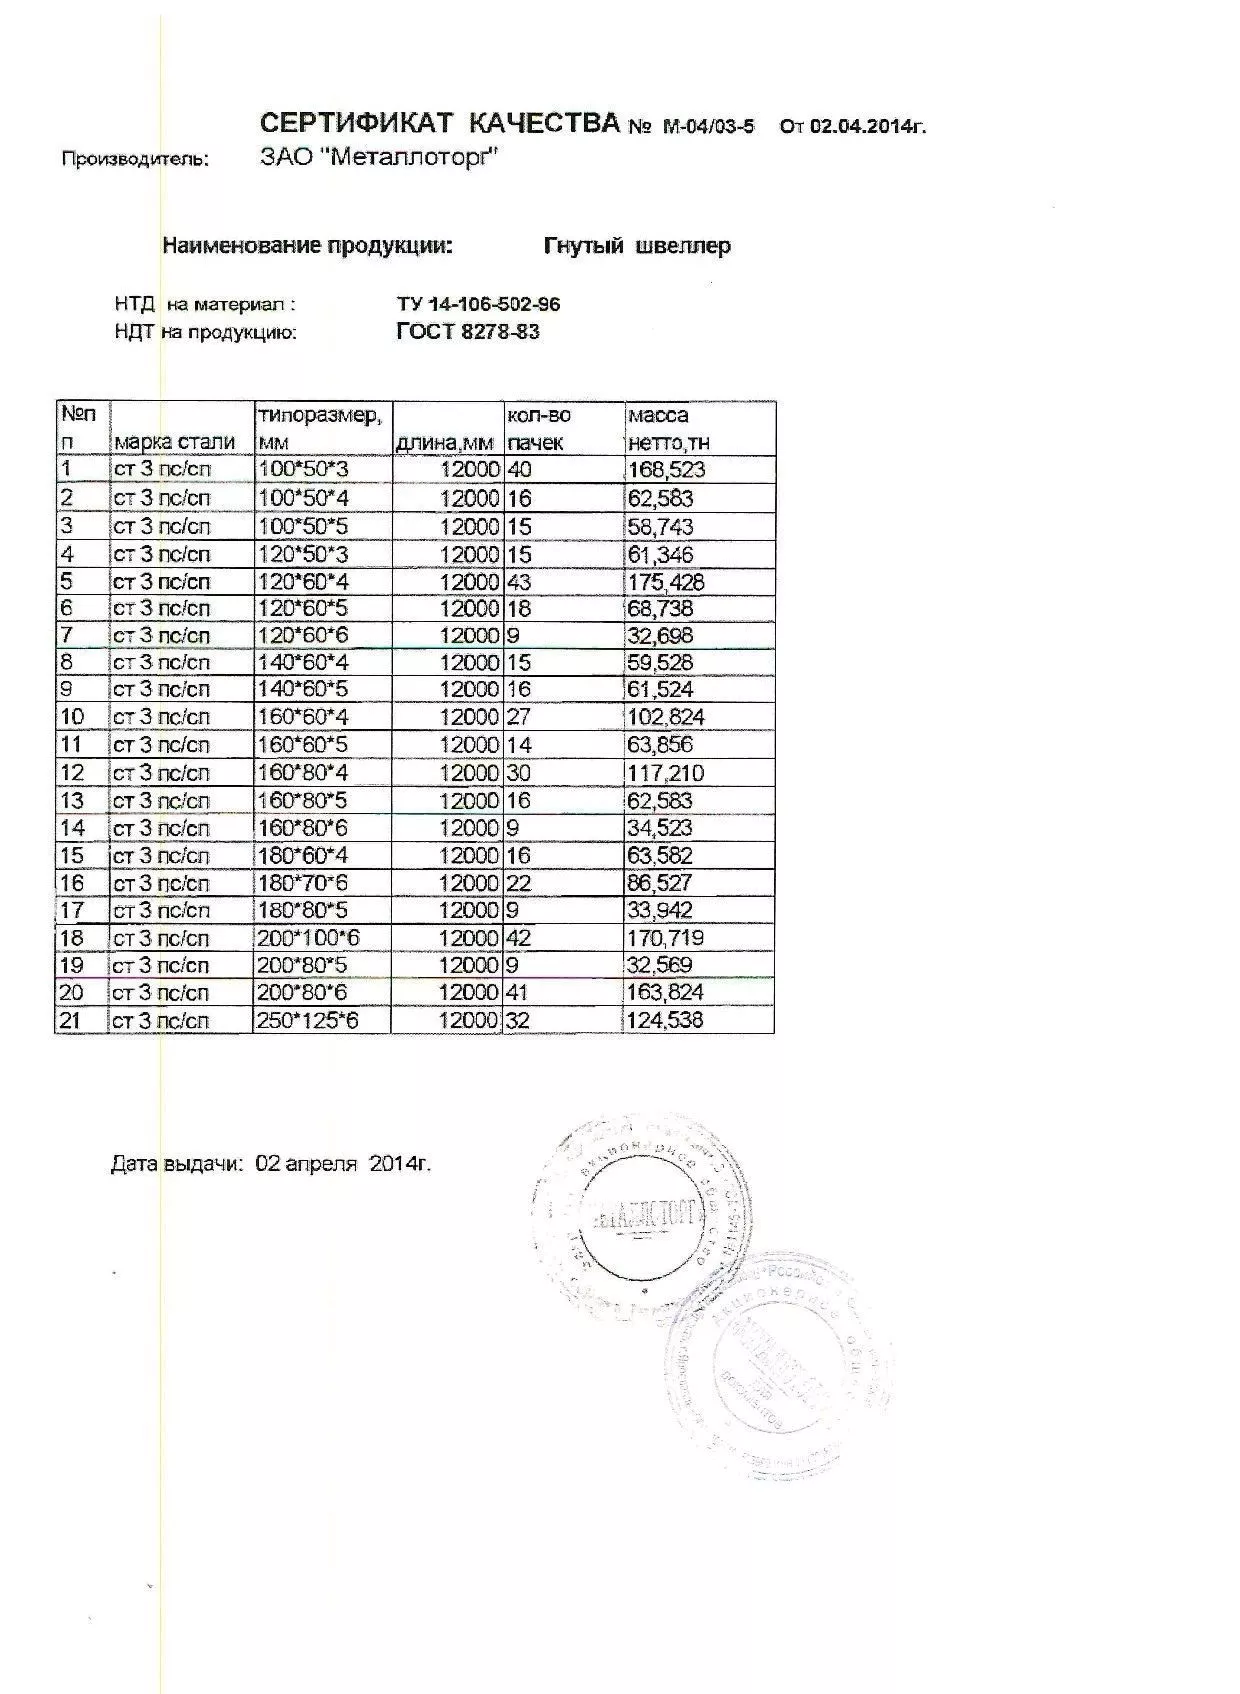 Сертификат на швеллер гнутый 250х125х6 от 2014-04